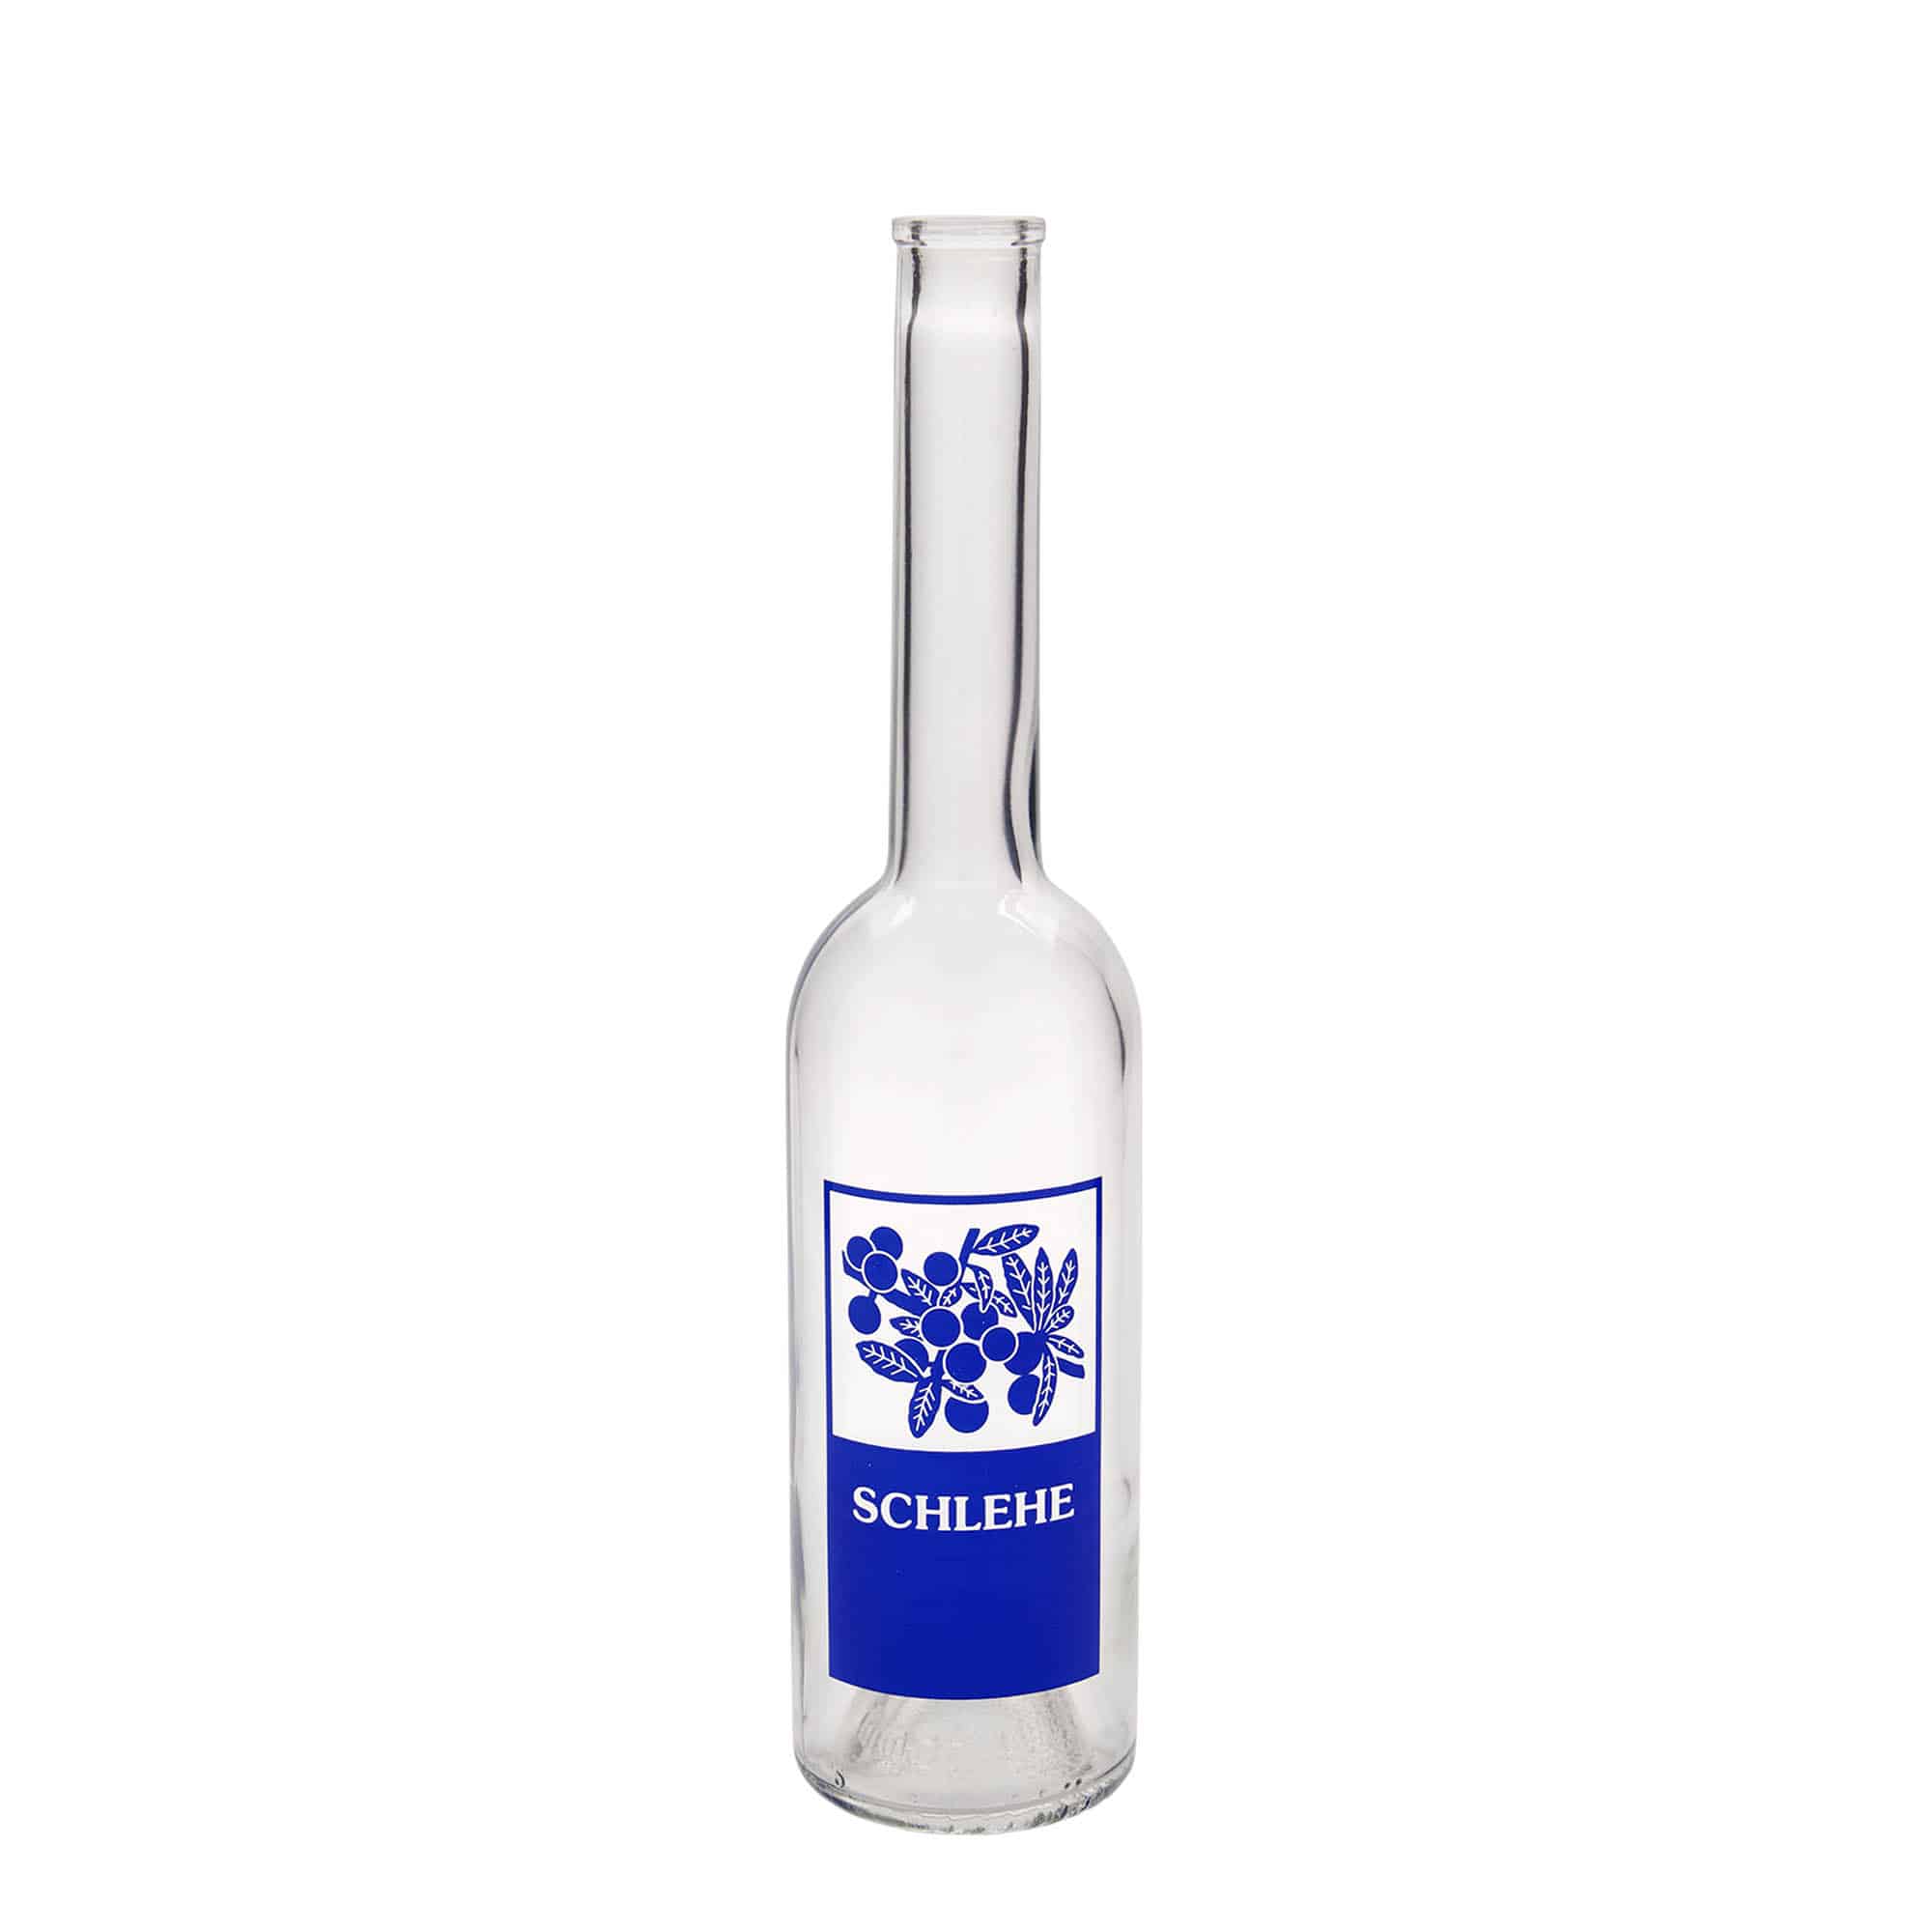 500 ml glass bottle 'Opera', print: “Schlehe”, closure: cork